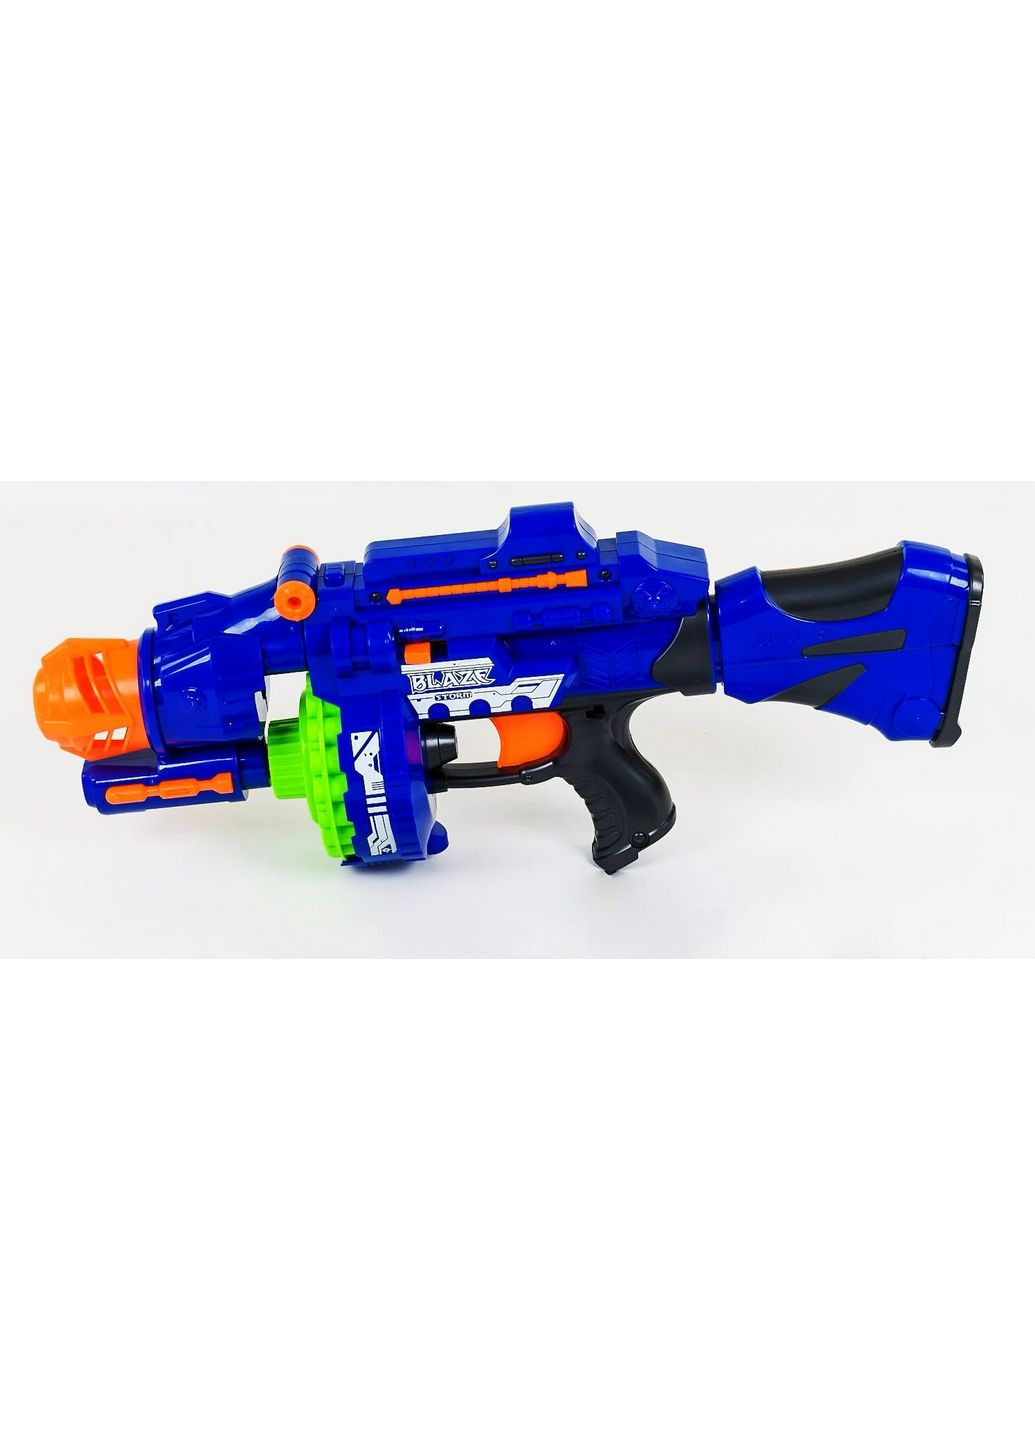 Кулемет-бластер "Blaze Storm" м'які патрони 56х25х14 см Zecong Toys (289365691)